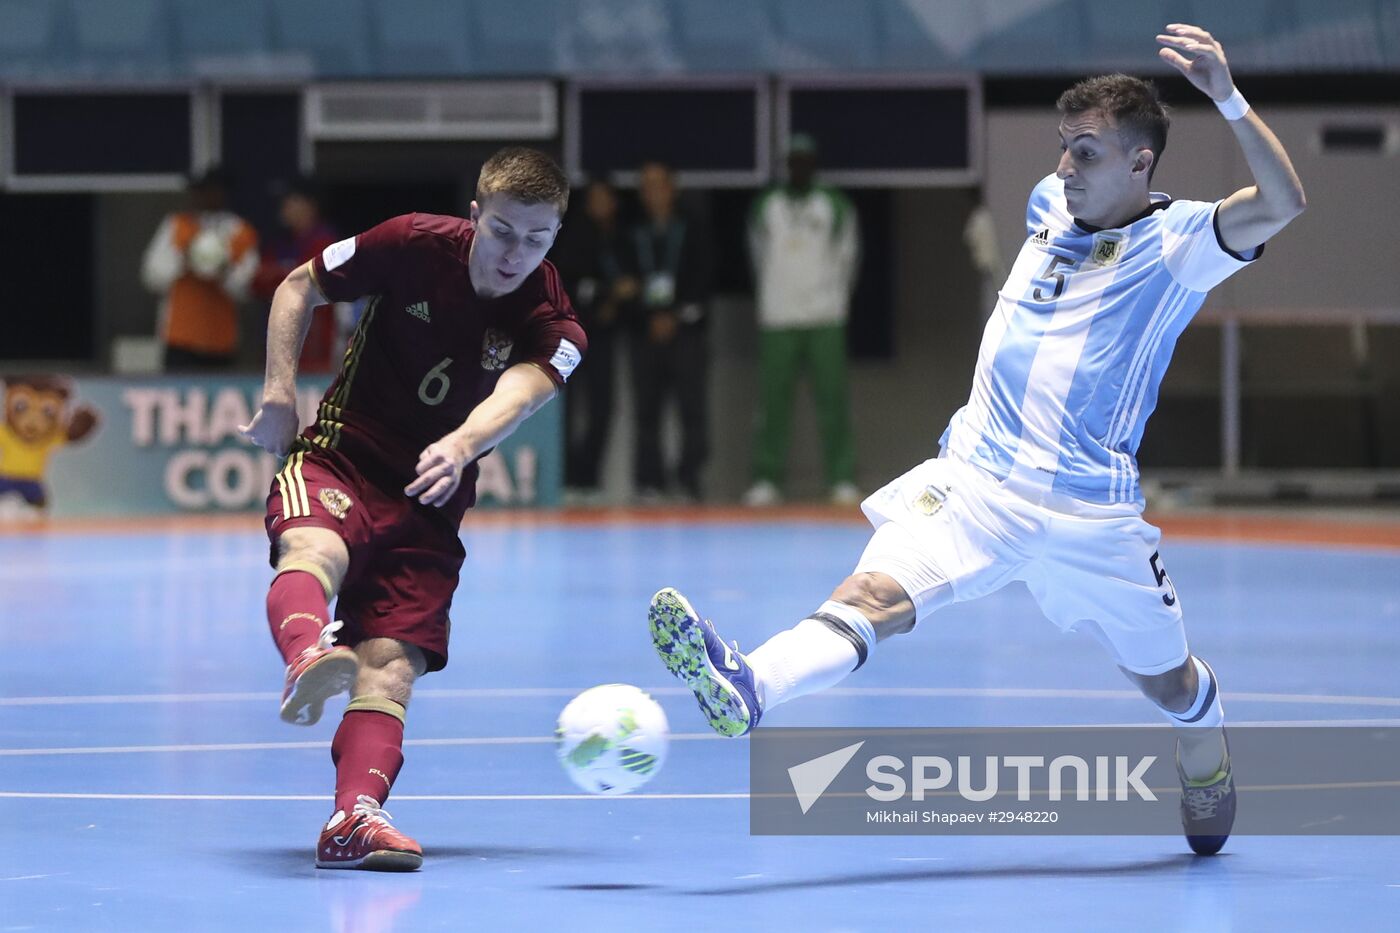 Futsal World Cup Final. Russia vs. Argentina